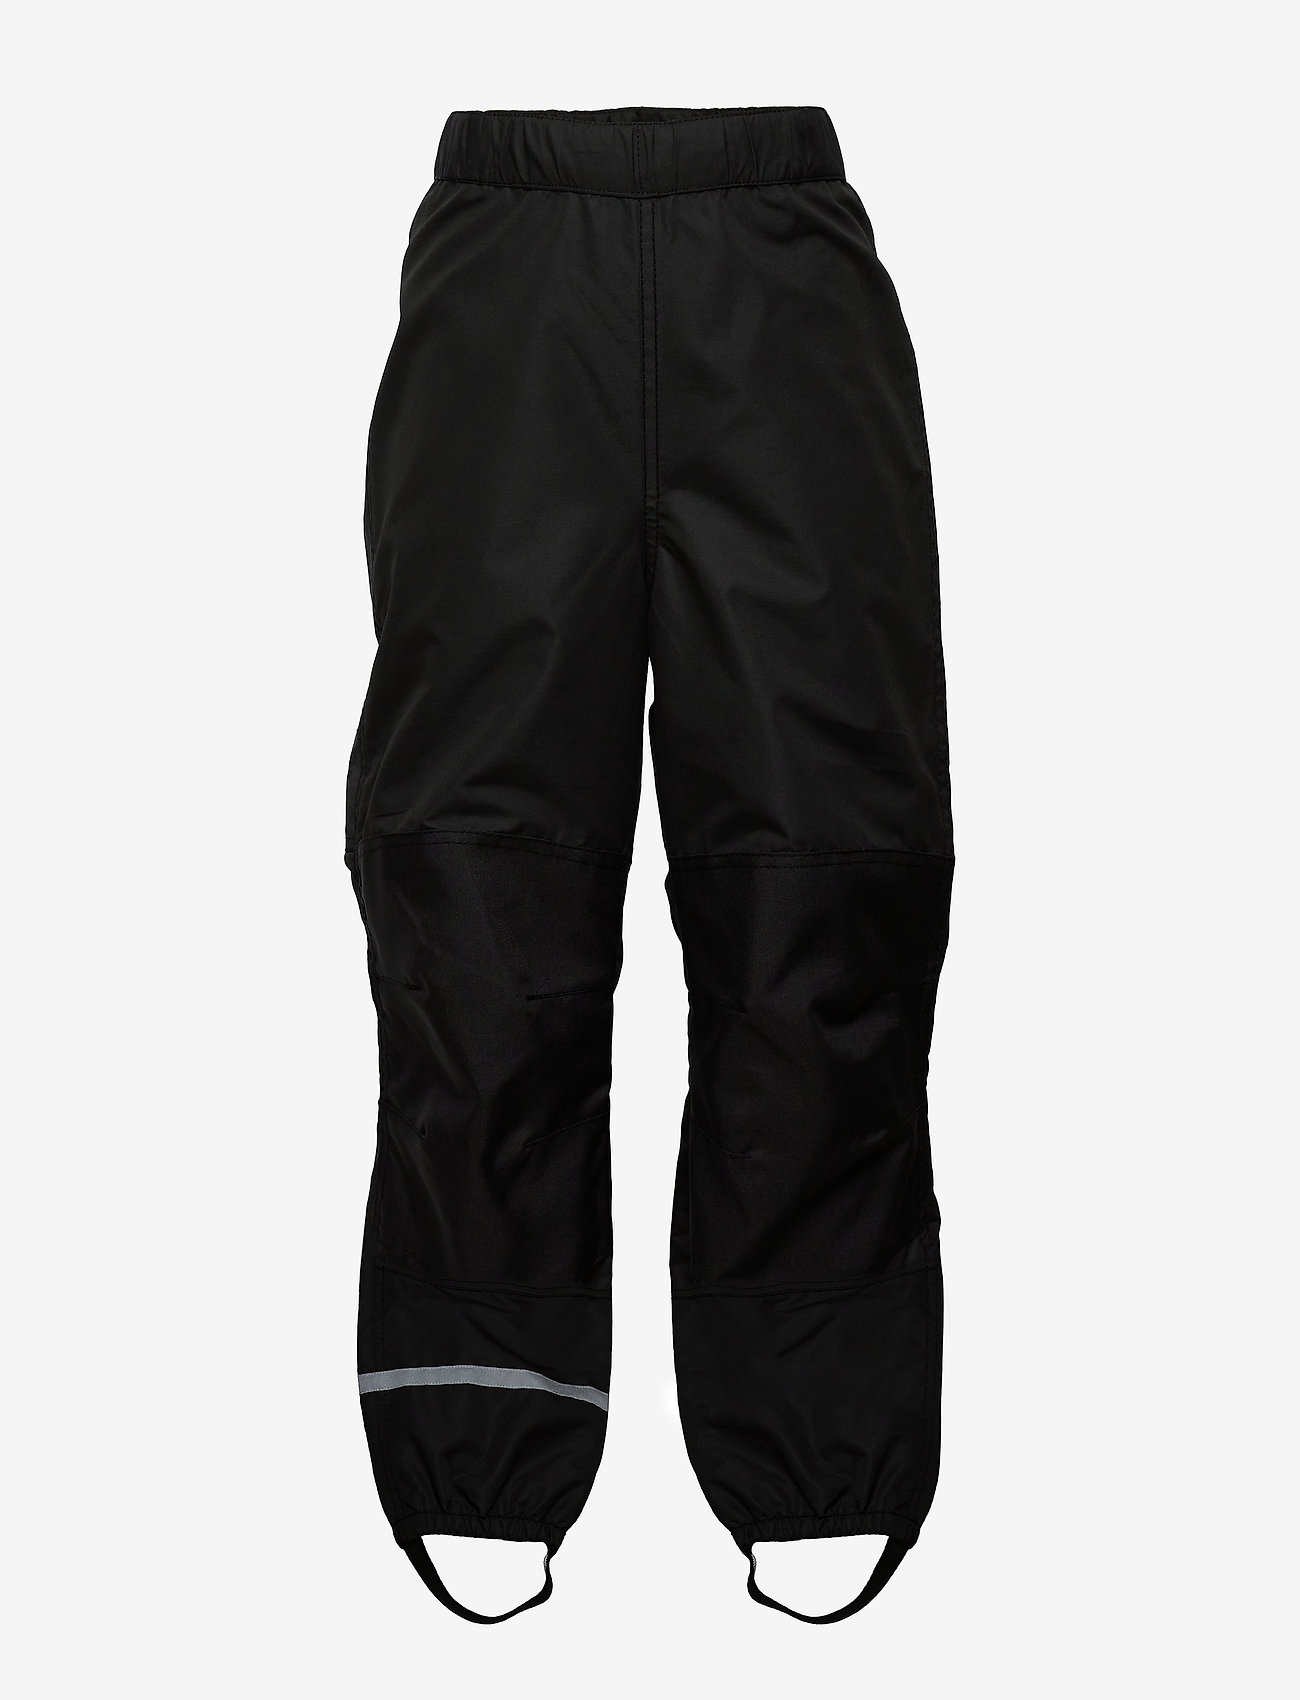 Lindex - SM Taslon trousers - rain trousers - black - 1